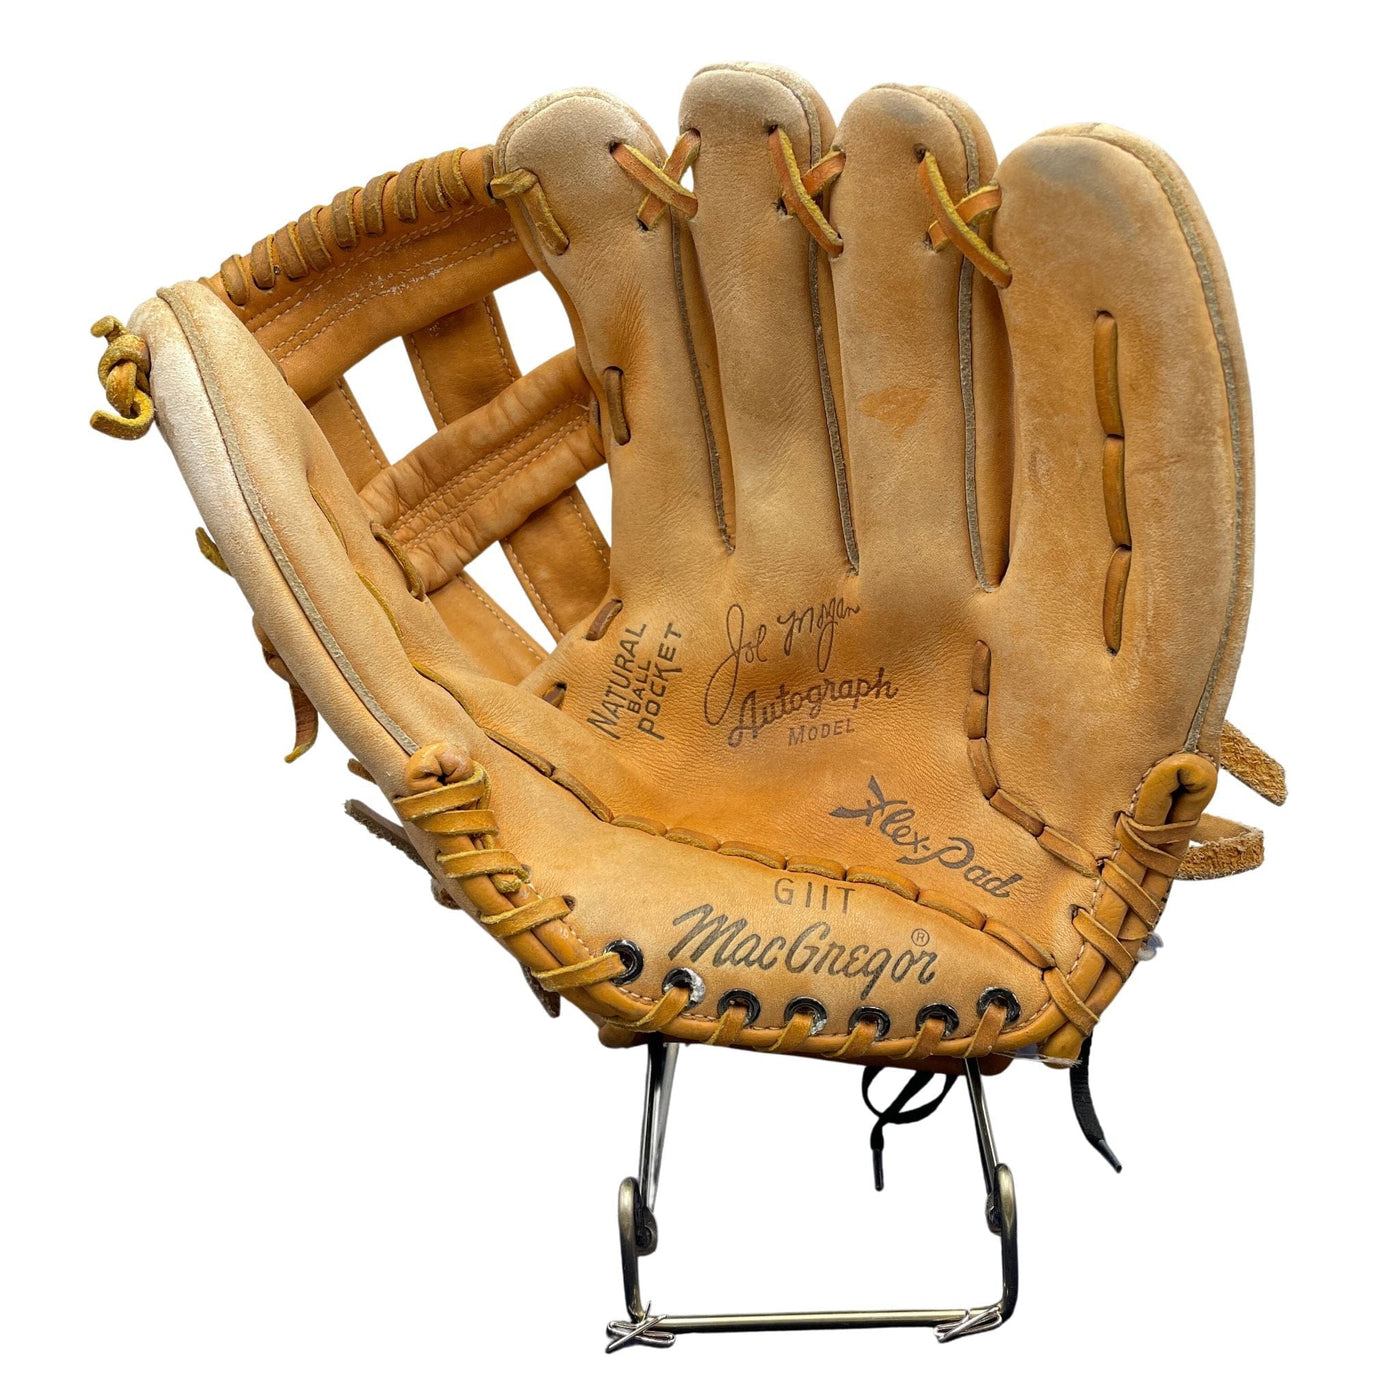 Joe Morgan Baseball Glove - G006